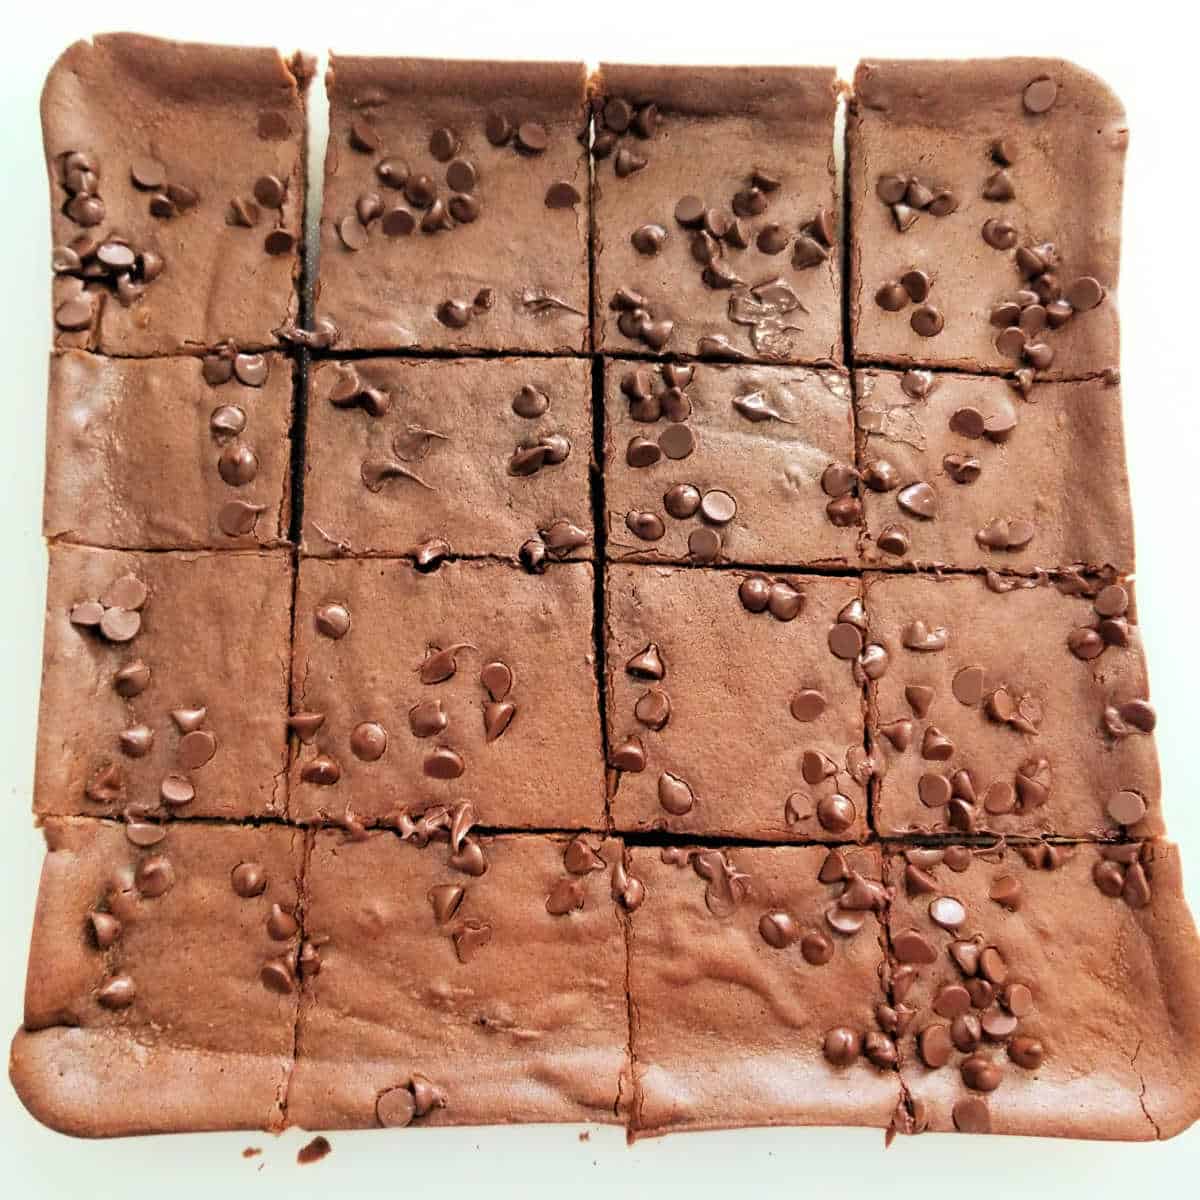 Black Bean Brownies cut into squares